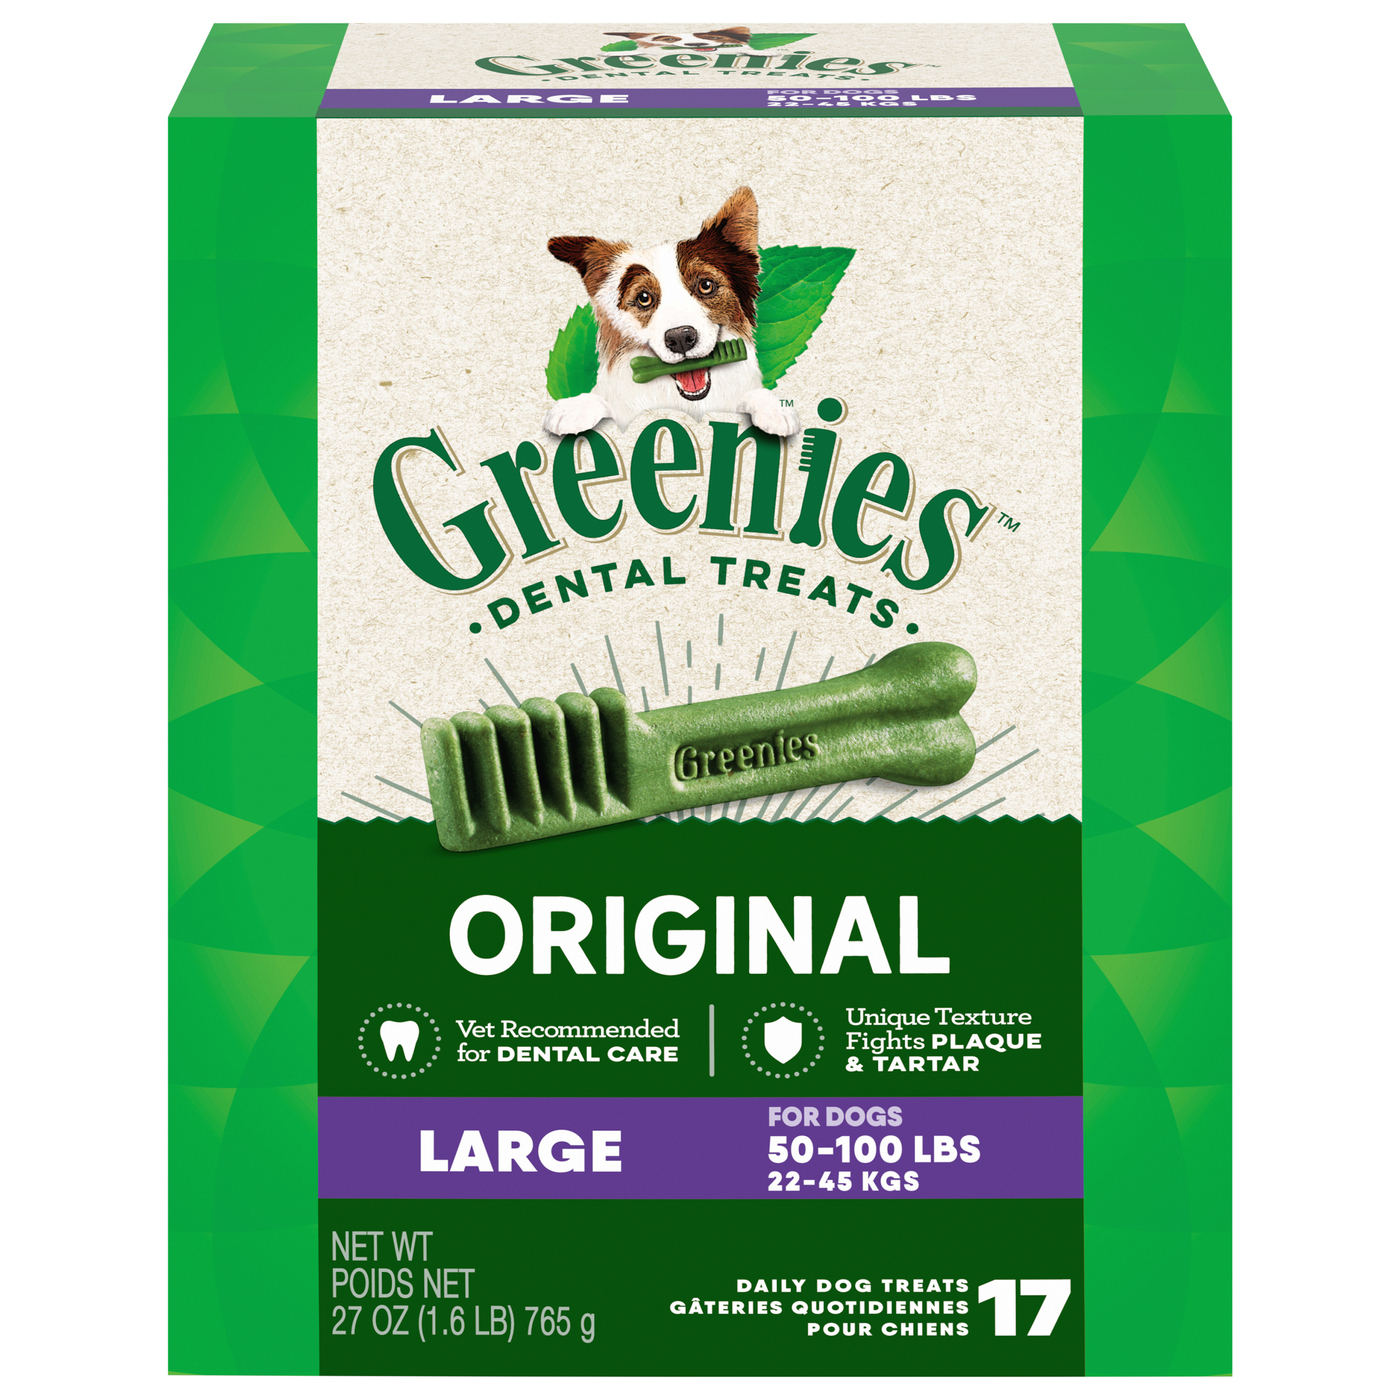 Greenies Original Large Dental Treats 17 ct Box